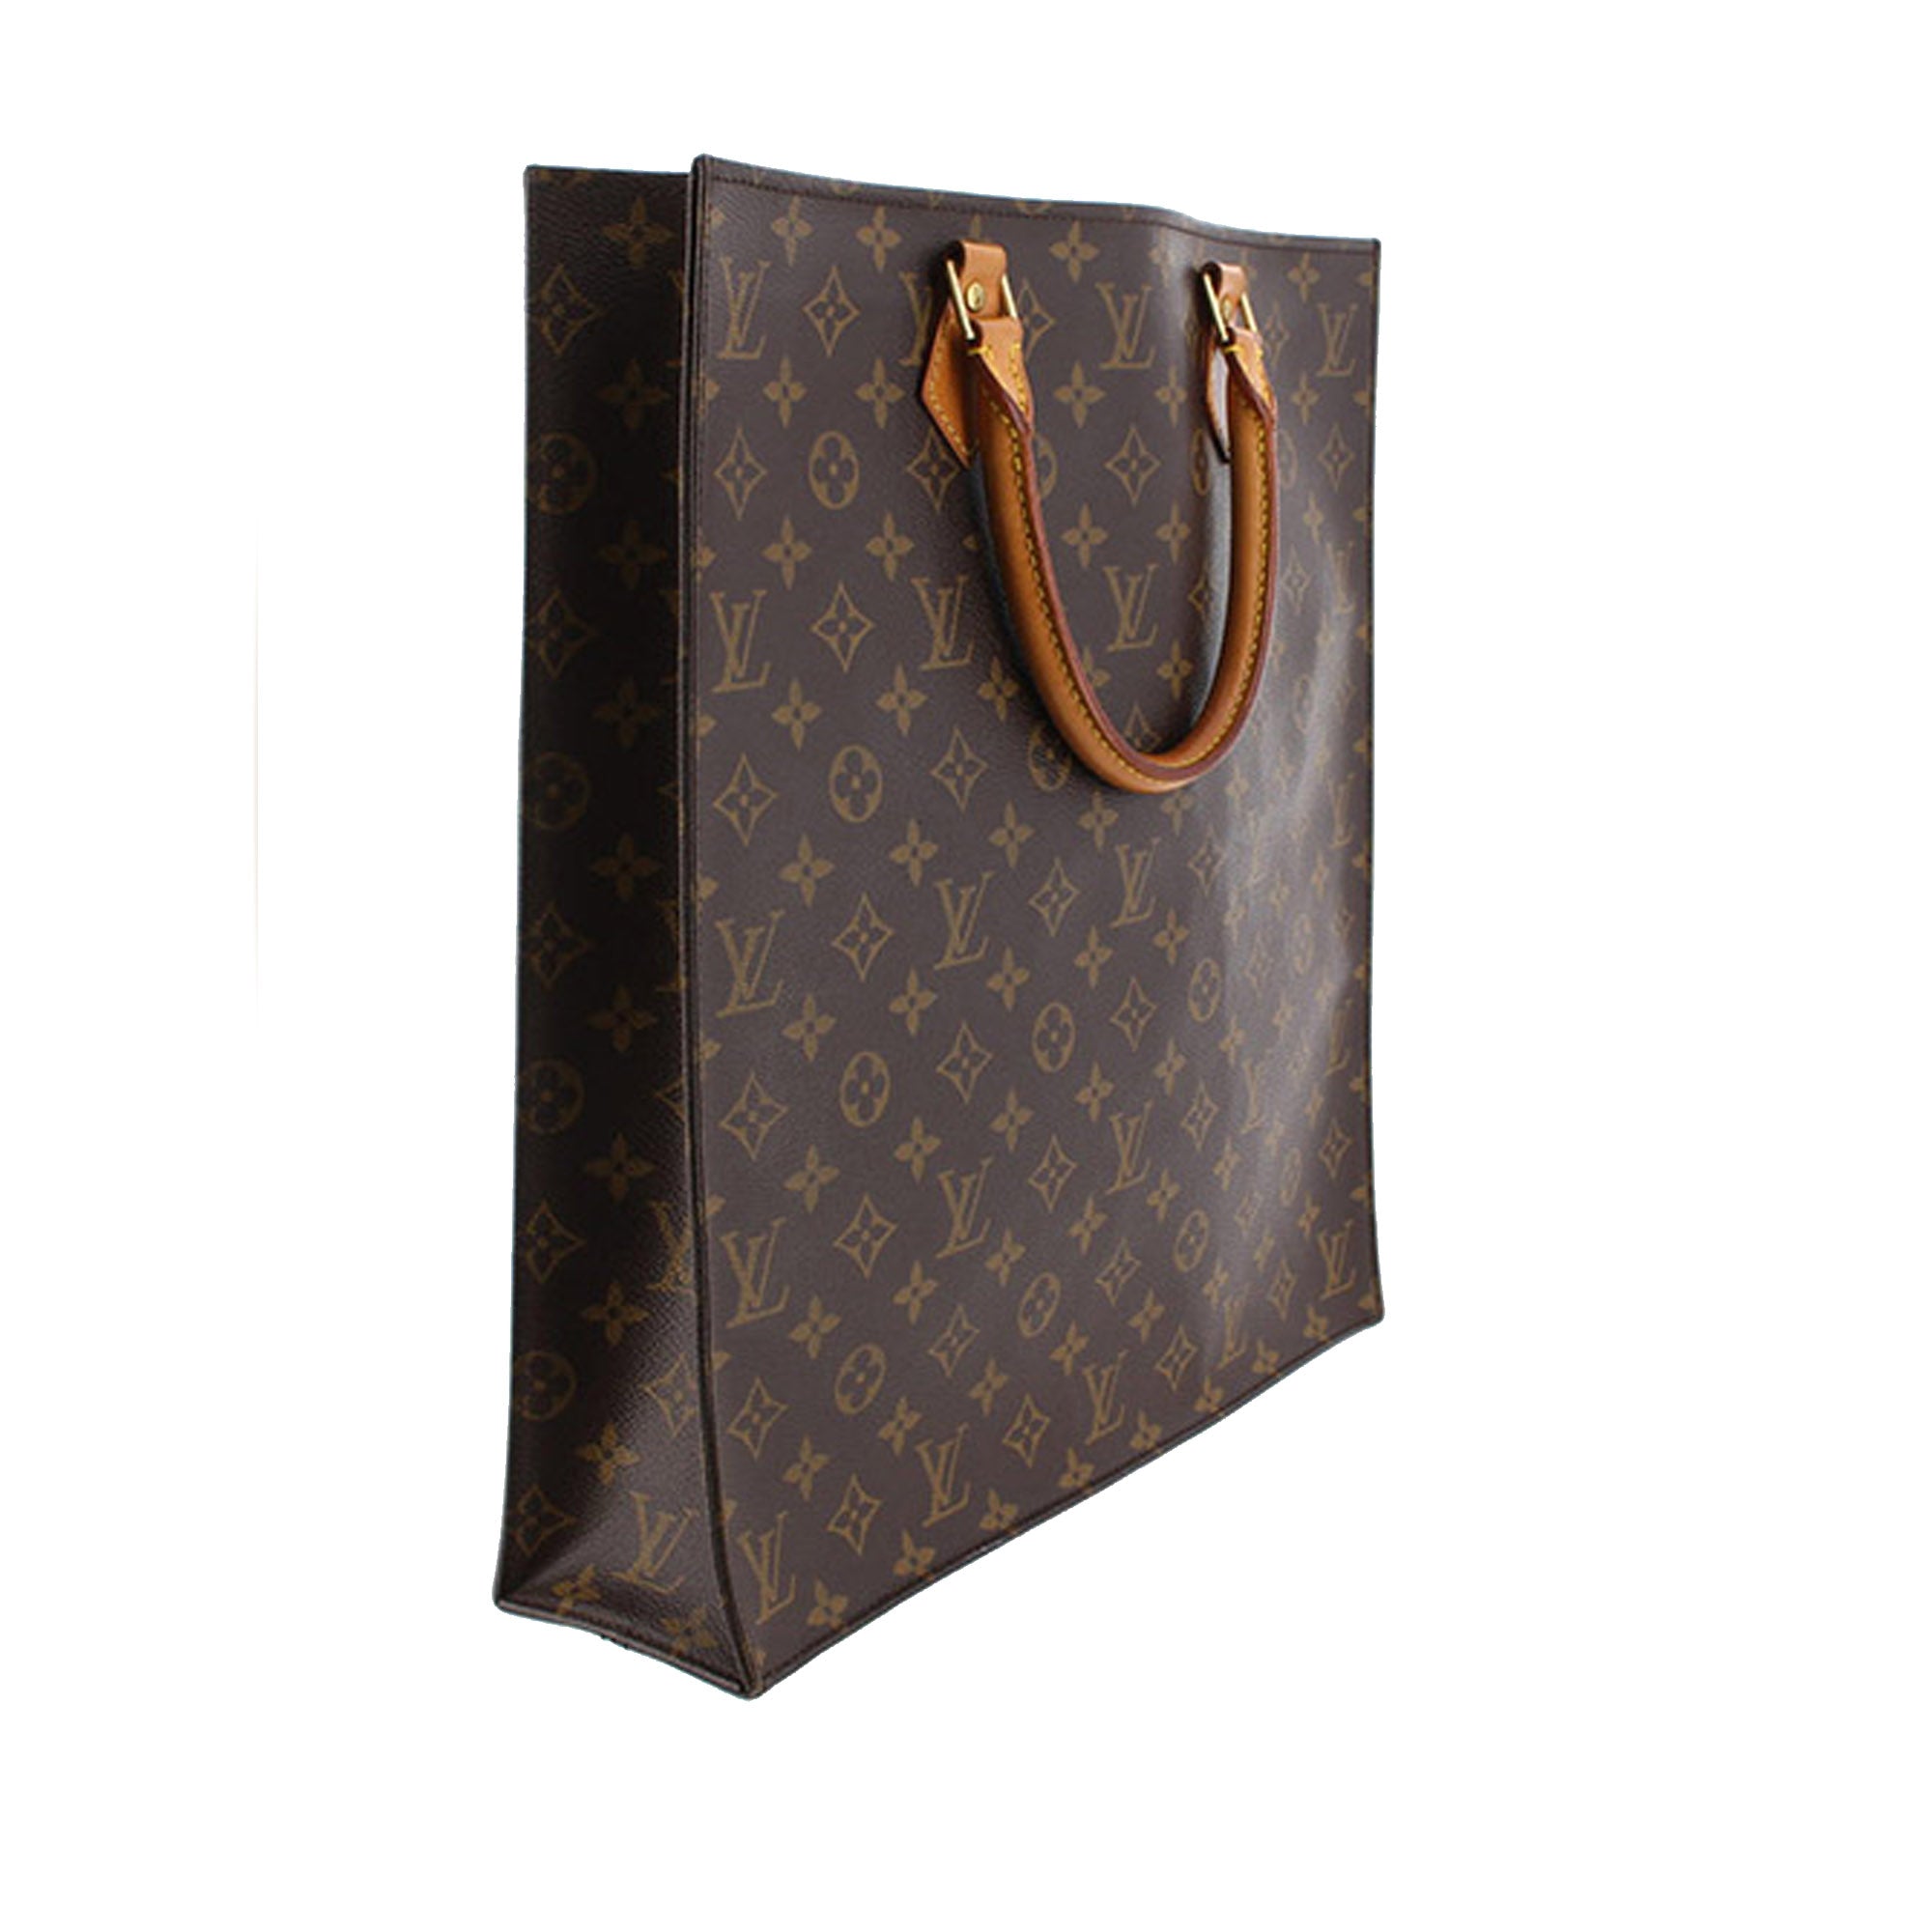 Louis Vuitton Monogram Canvas Sac Plat Tote Bag